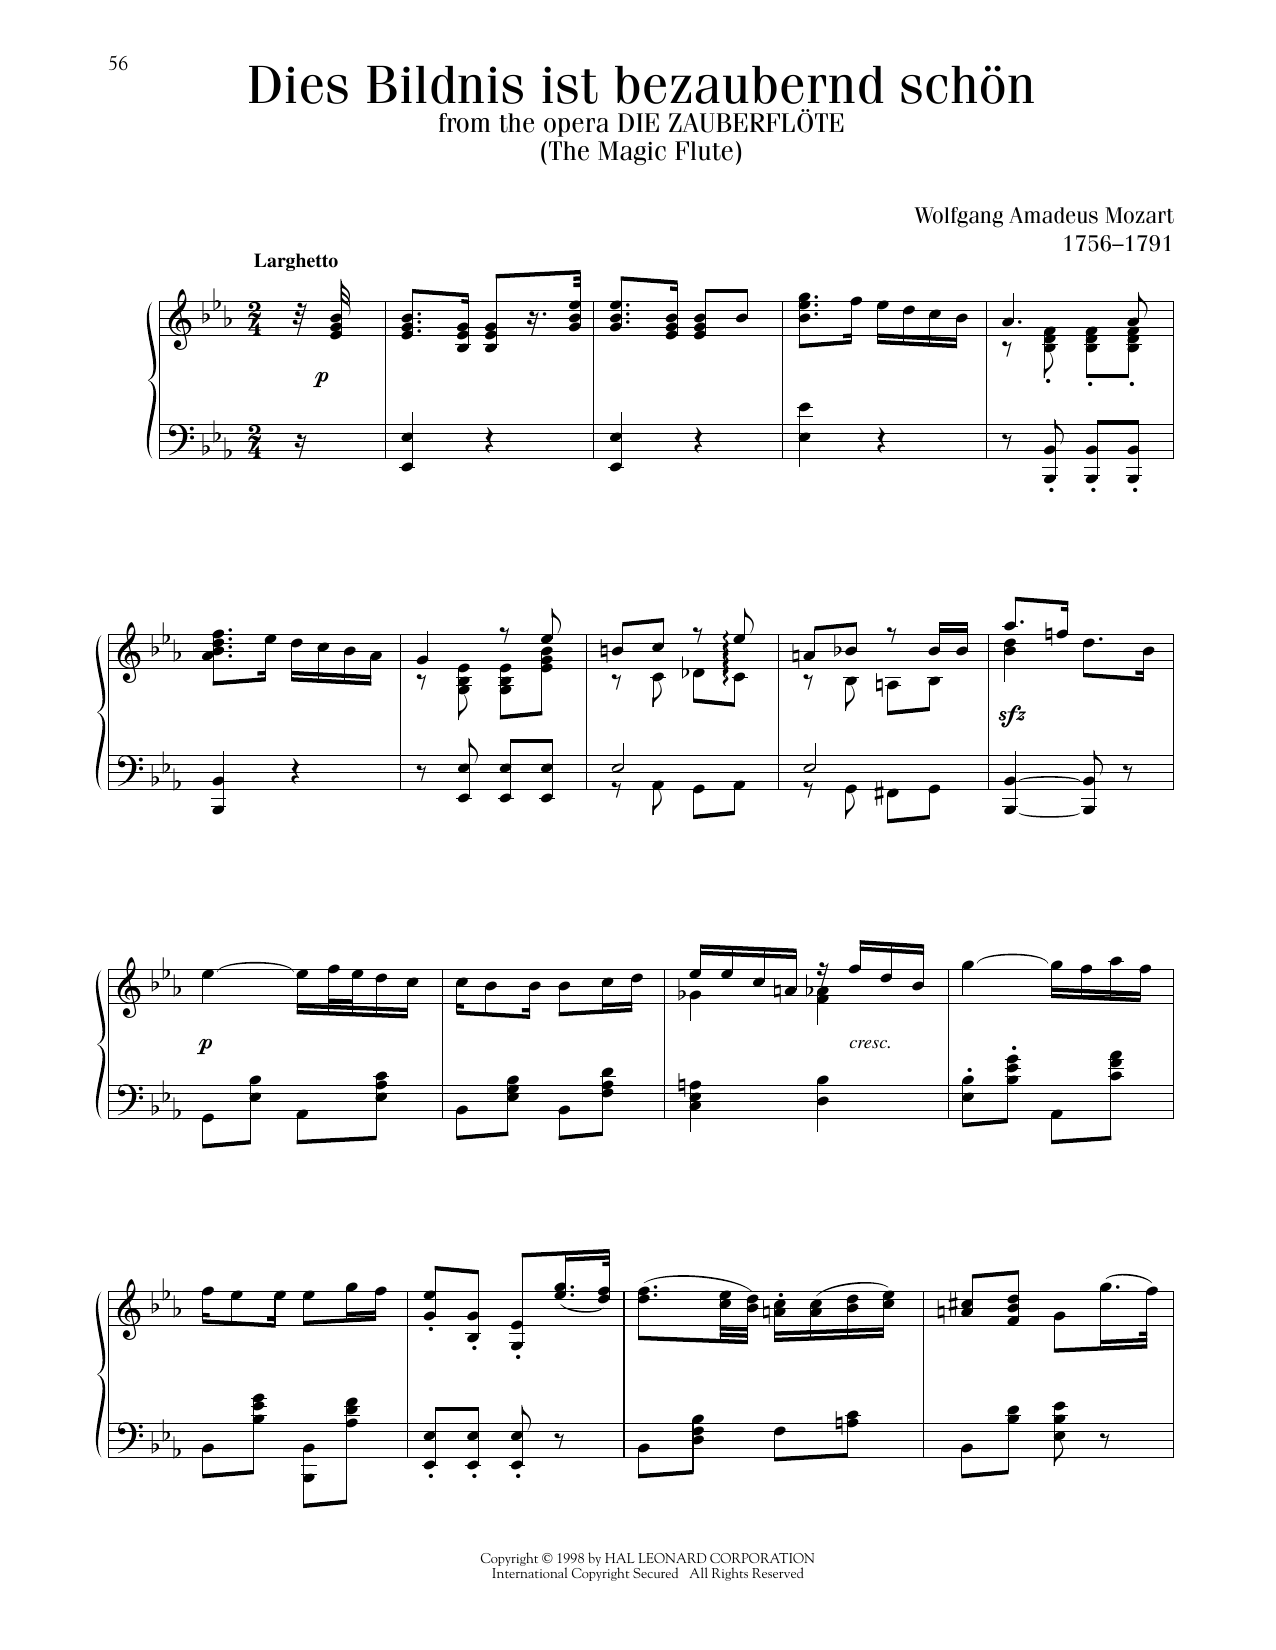 Wolfgang Amadeus Mozart Dies Bildnis Ist Bezaubernd Schon sheet music notes printable PDF score